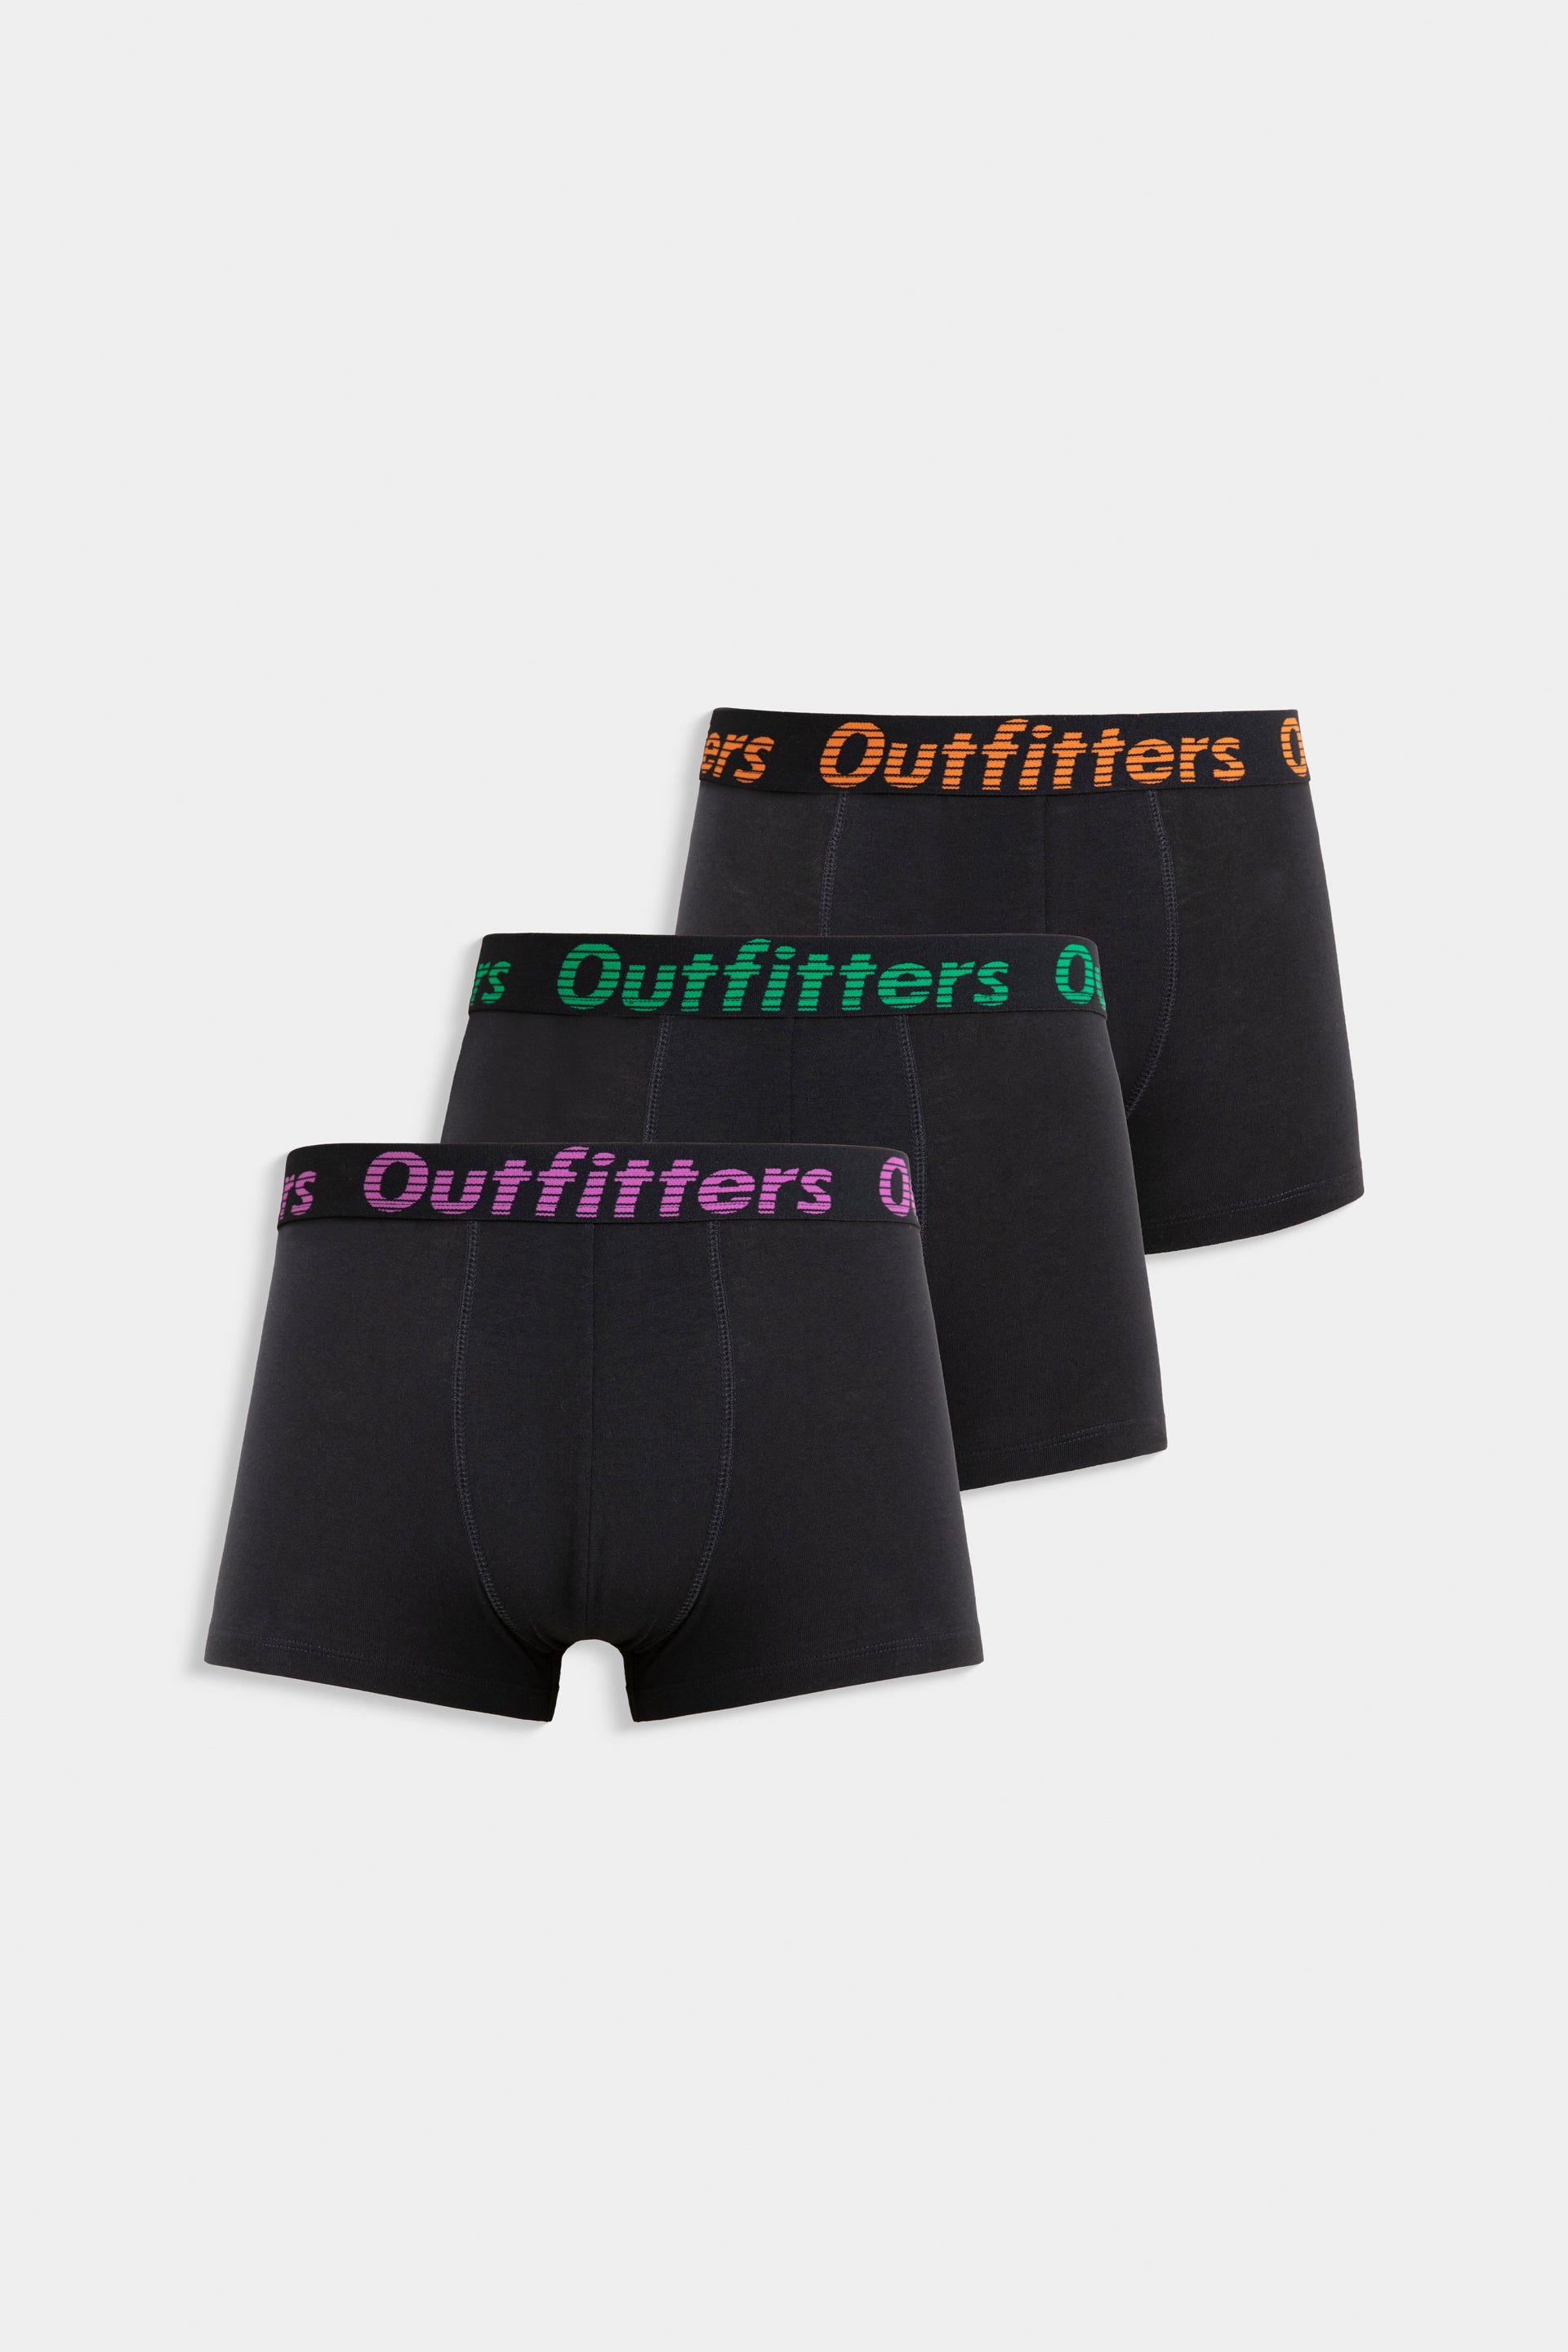 Men Underwear pure cotton boxer underwear for men boxers sale Price under  wear, under wear - Sale price - Buy online in Pakistan - Farosh.pk